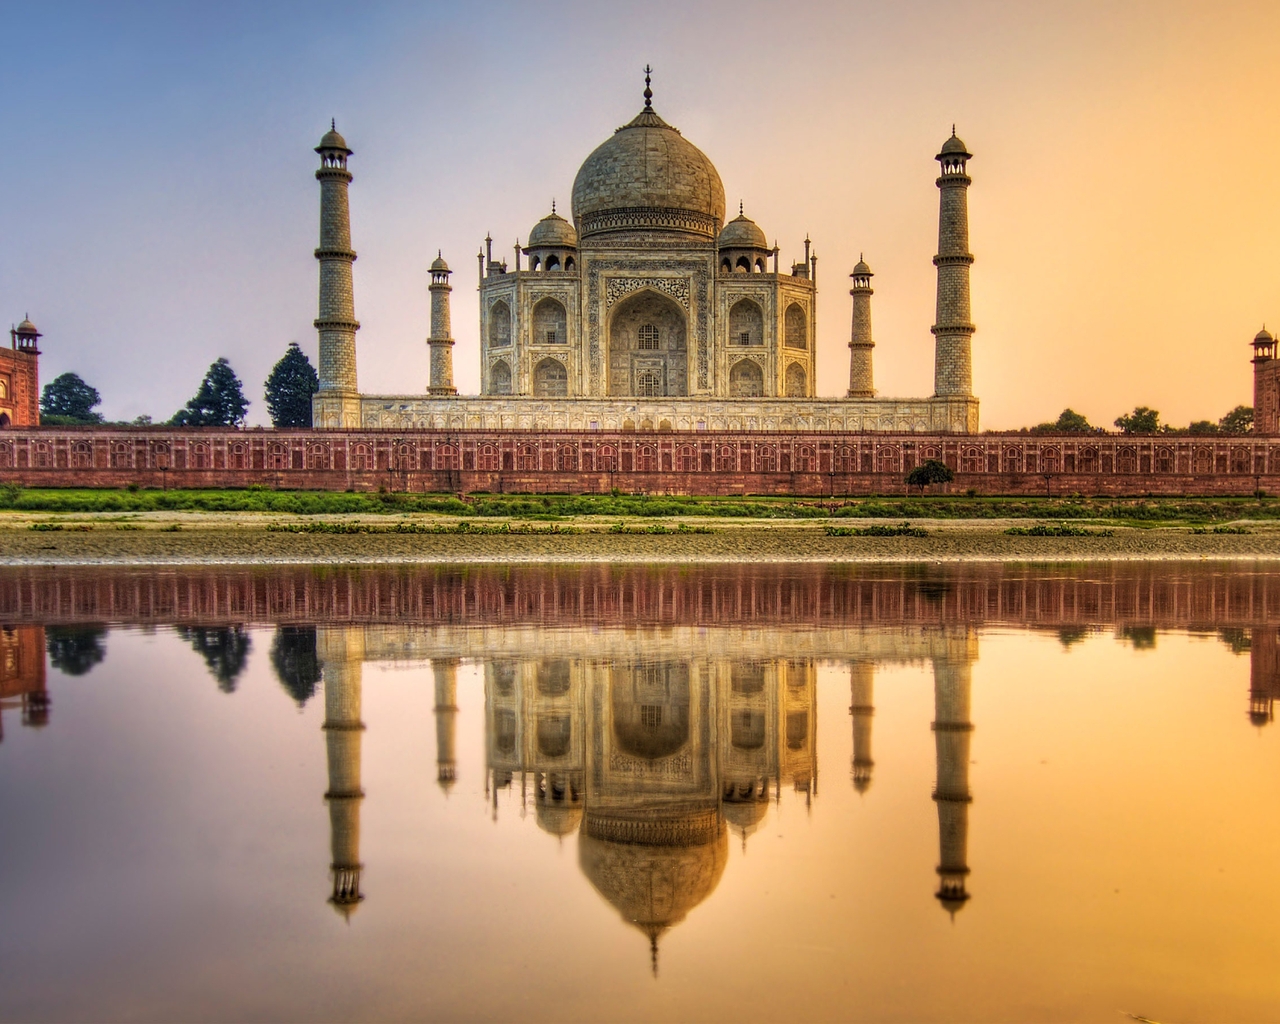 Картинка: Тадж-Махал, Taj Mahal, Индия, отражение